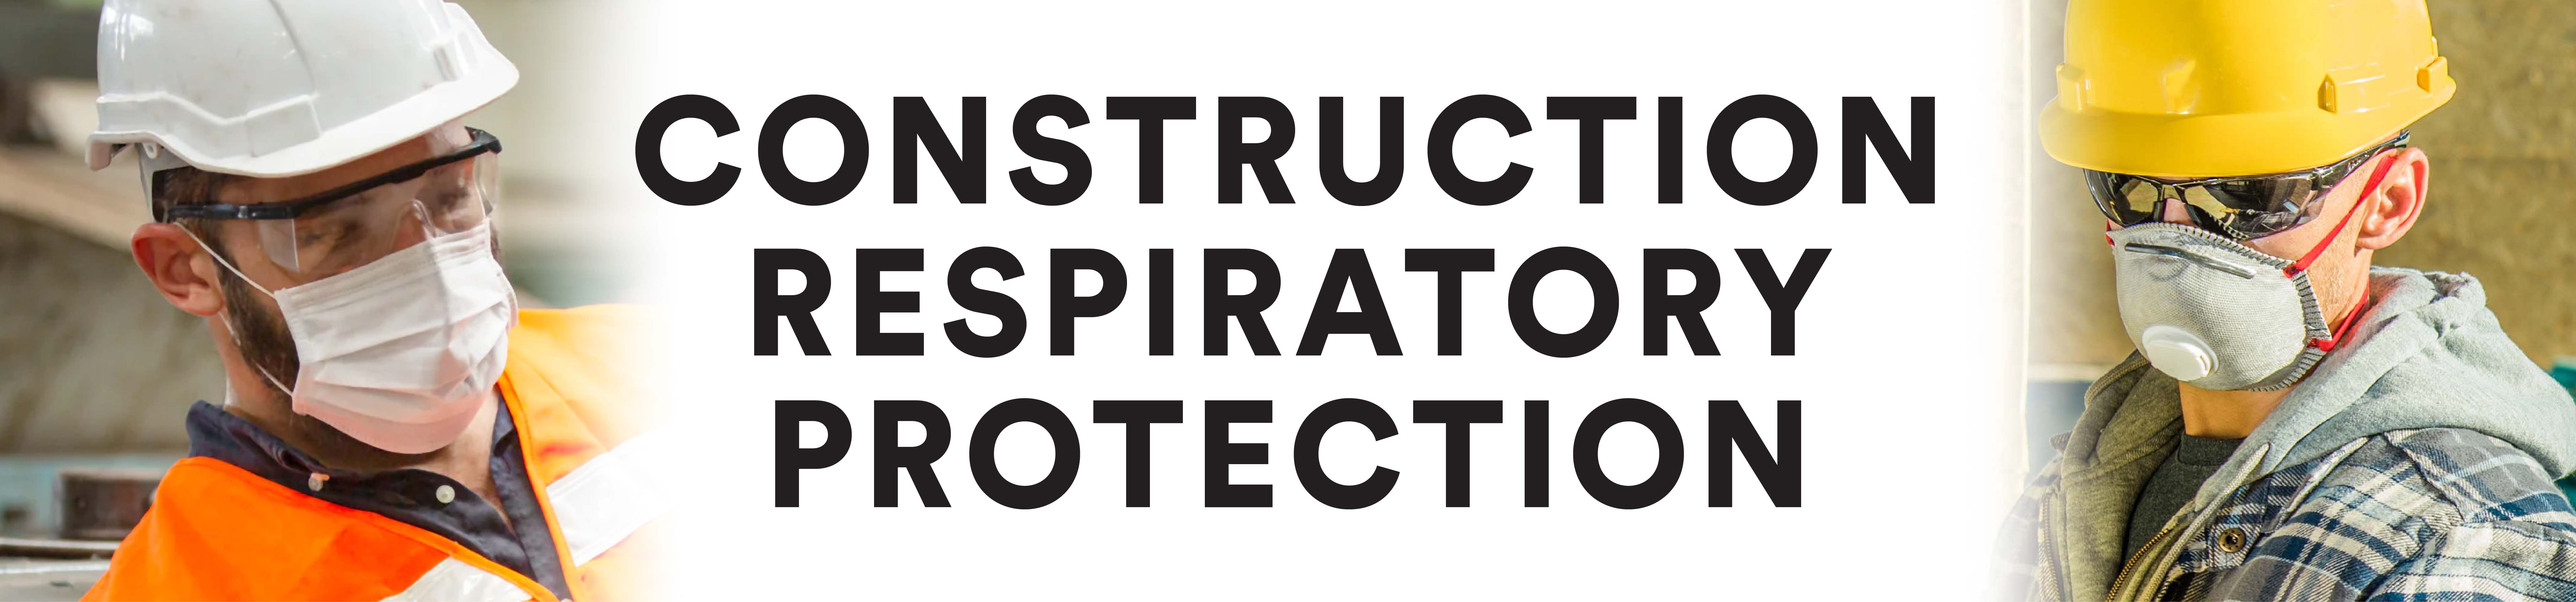 Construction Respiratory Protection